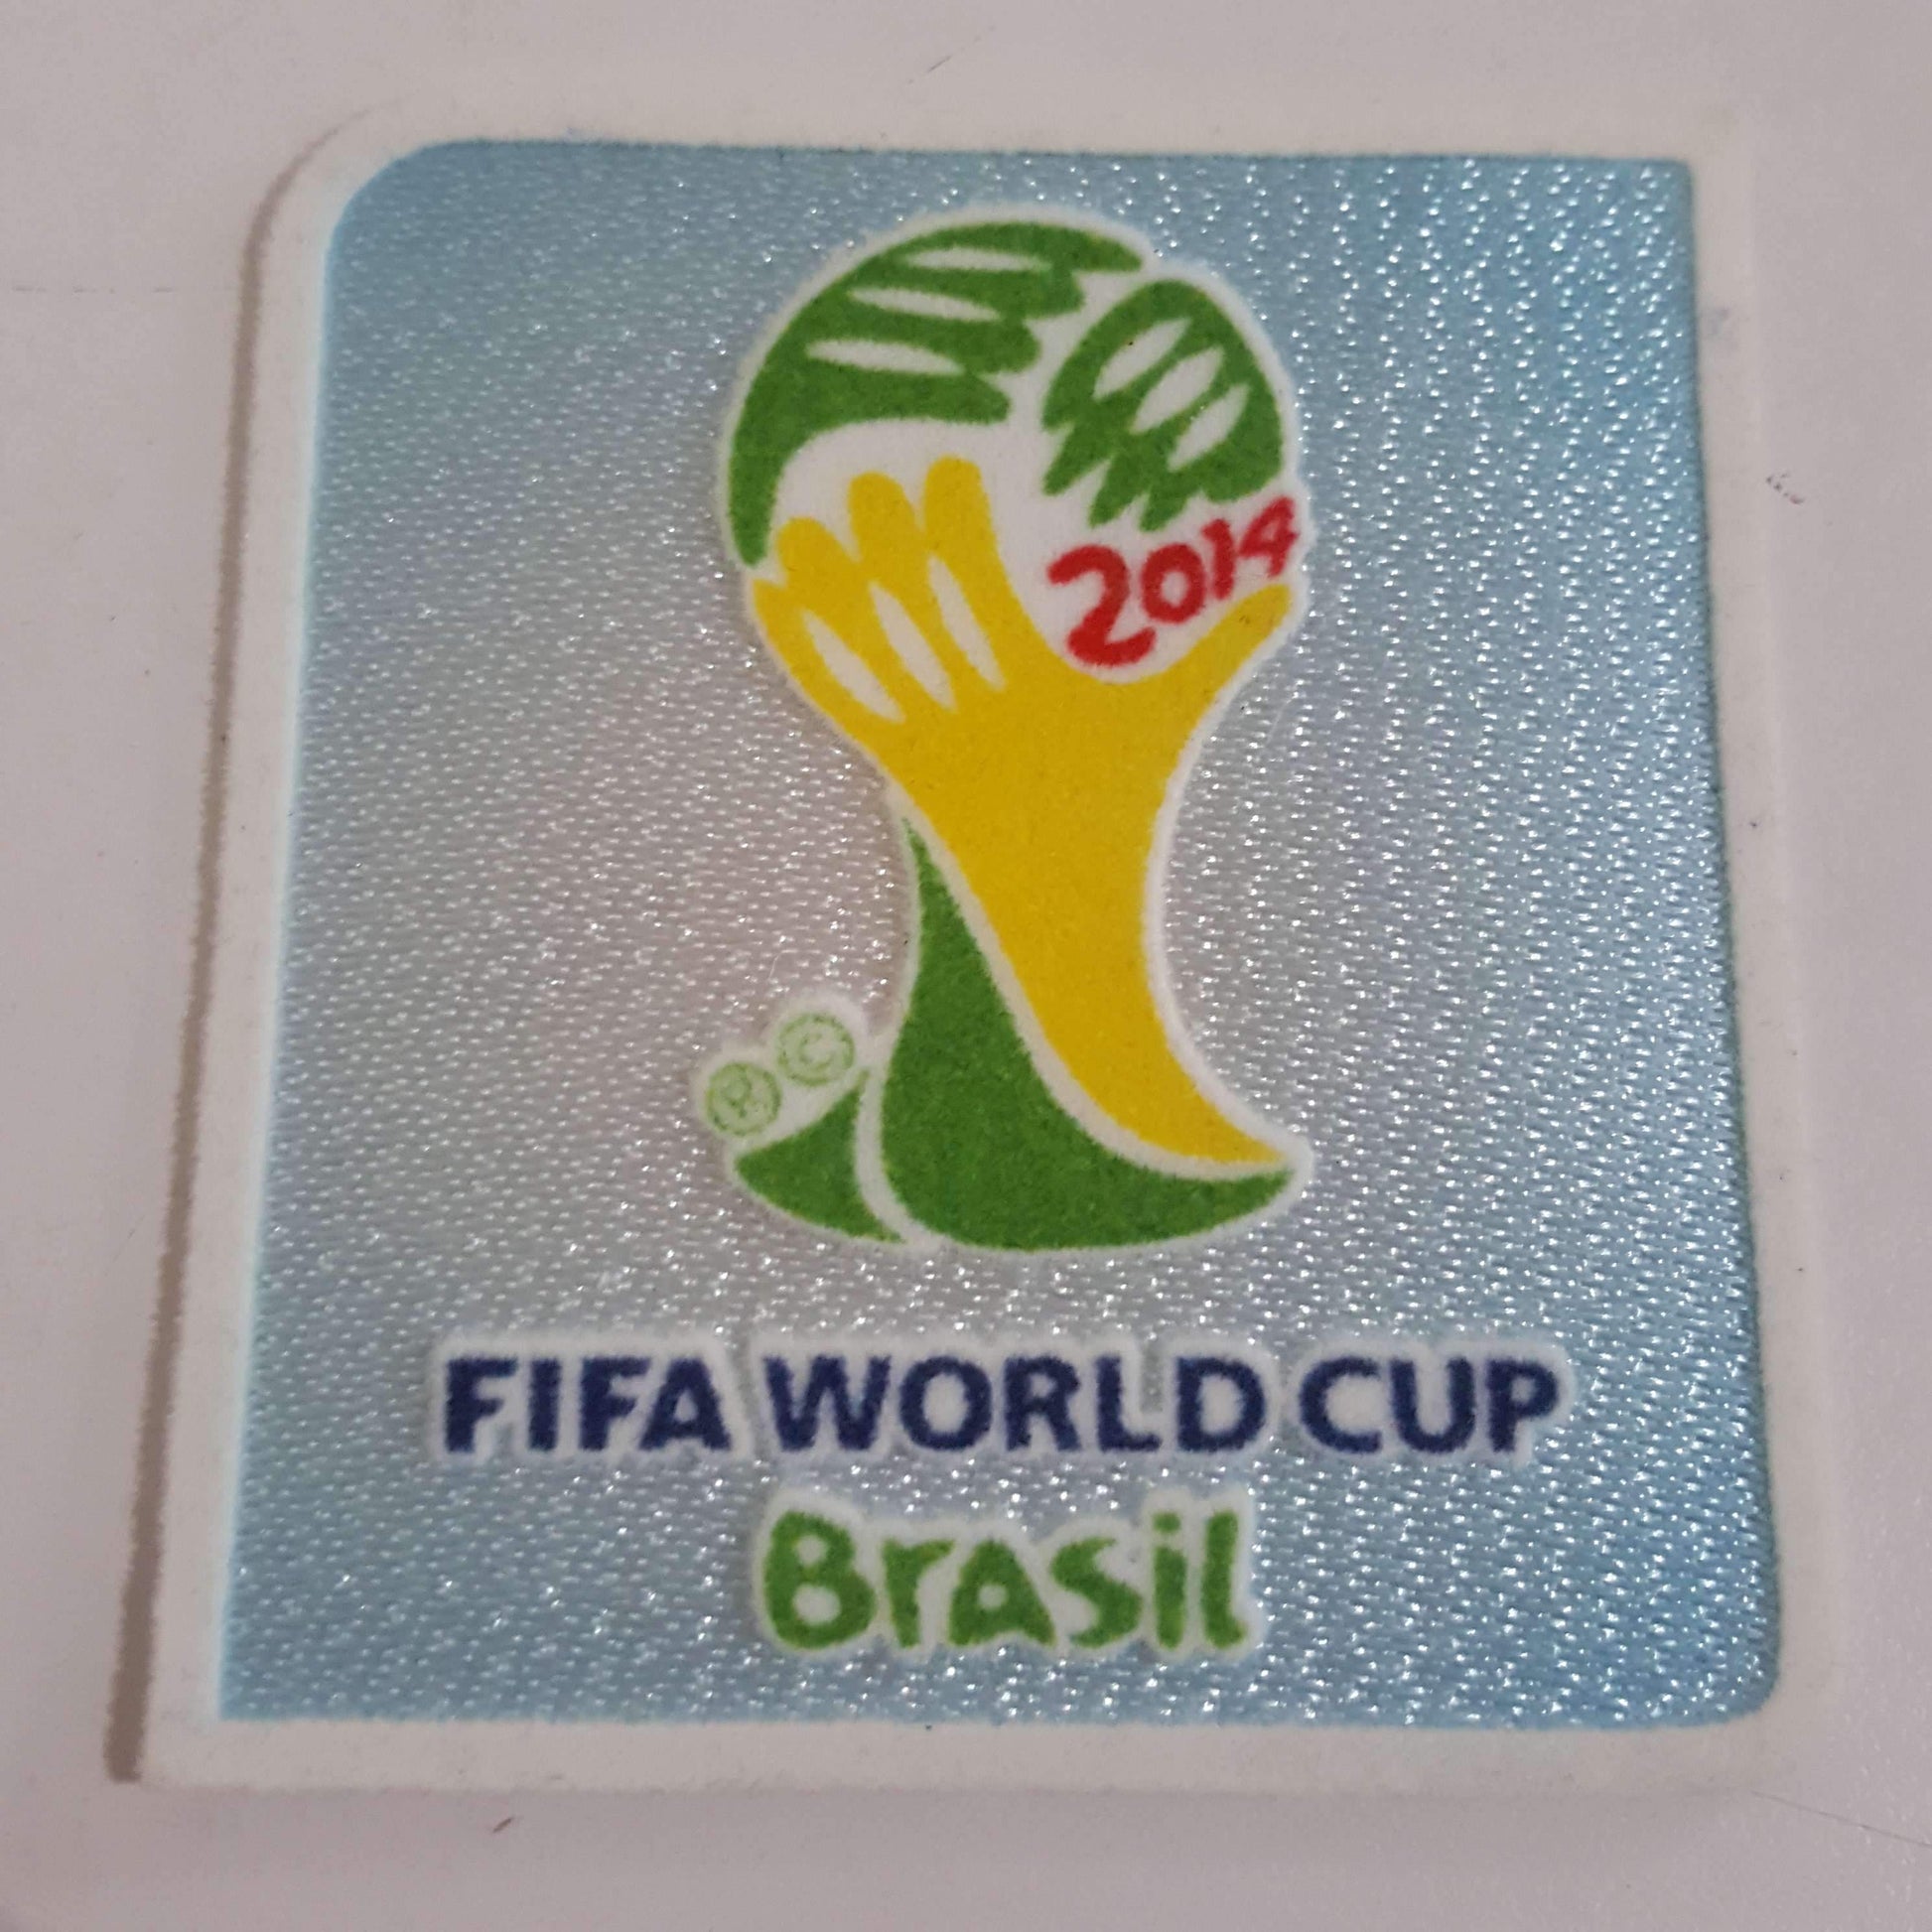 FIFA World Cup 2014 Brazil - ClassicFootballJersey